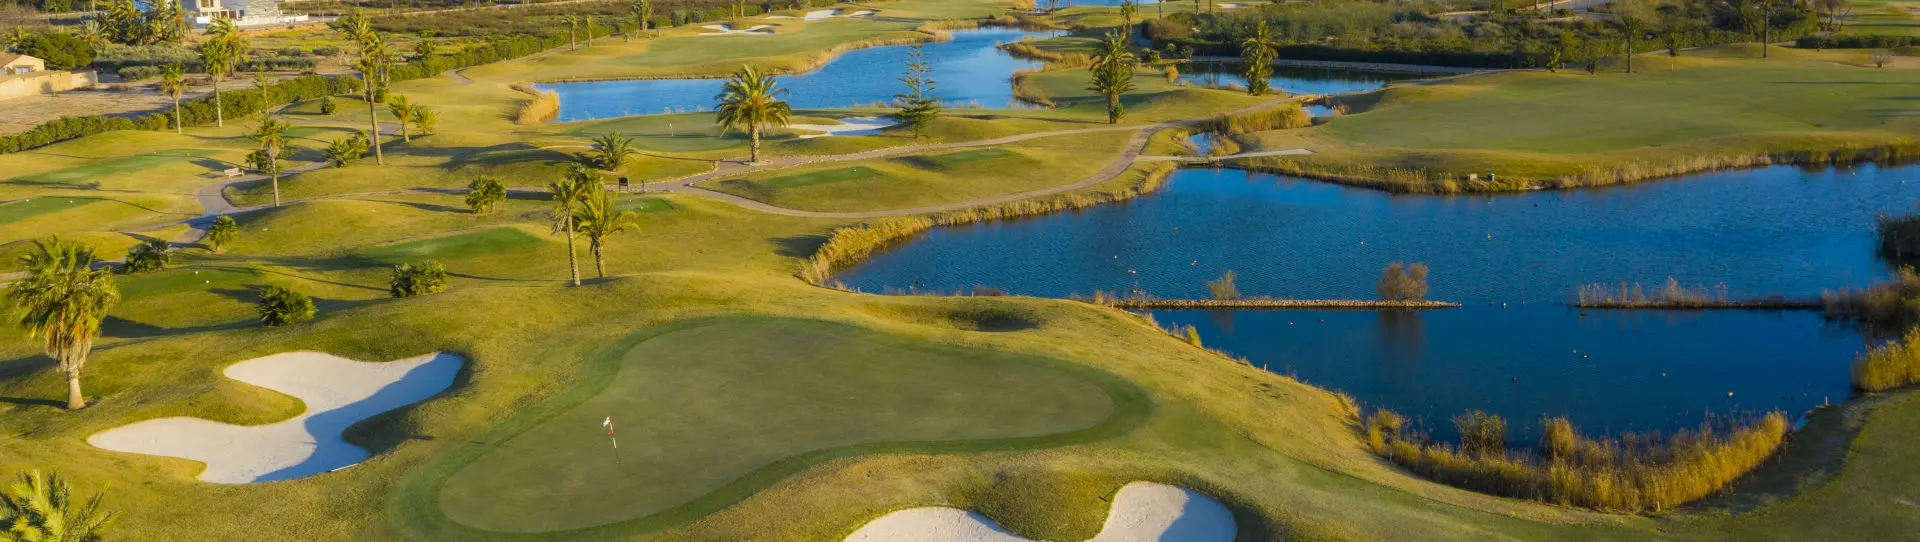 Spain golf courses - La Serena Golf Course - Photo 1